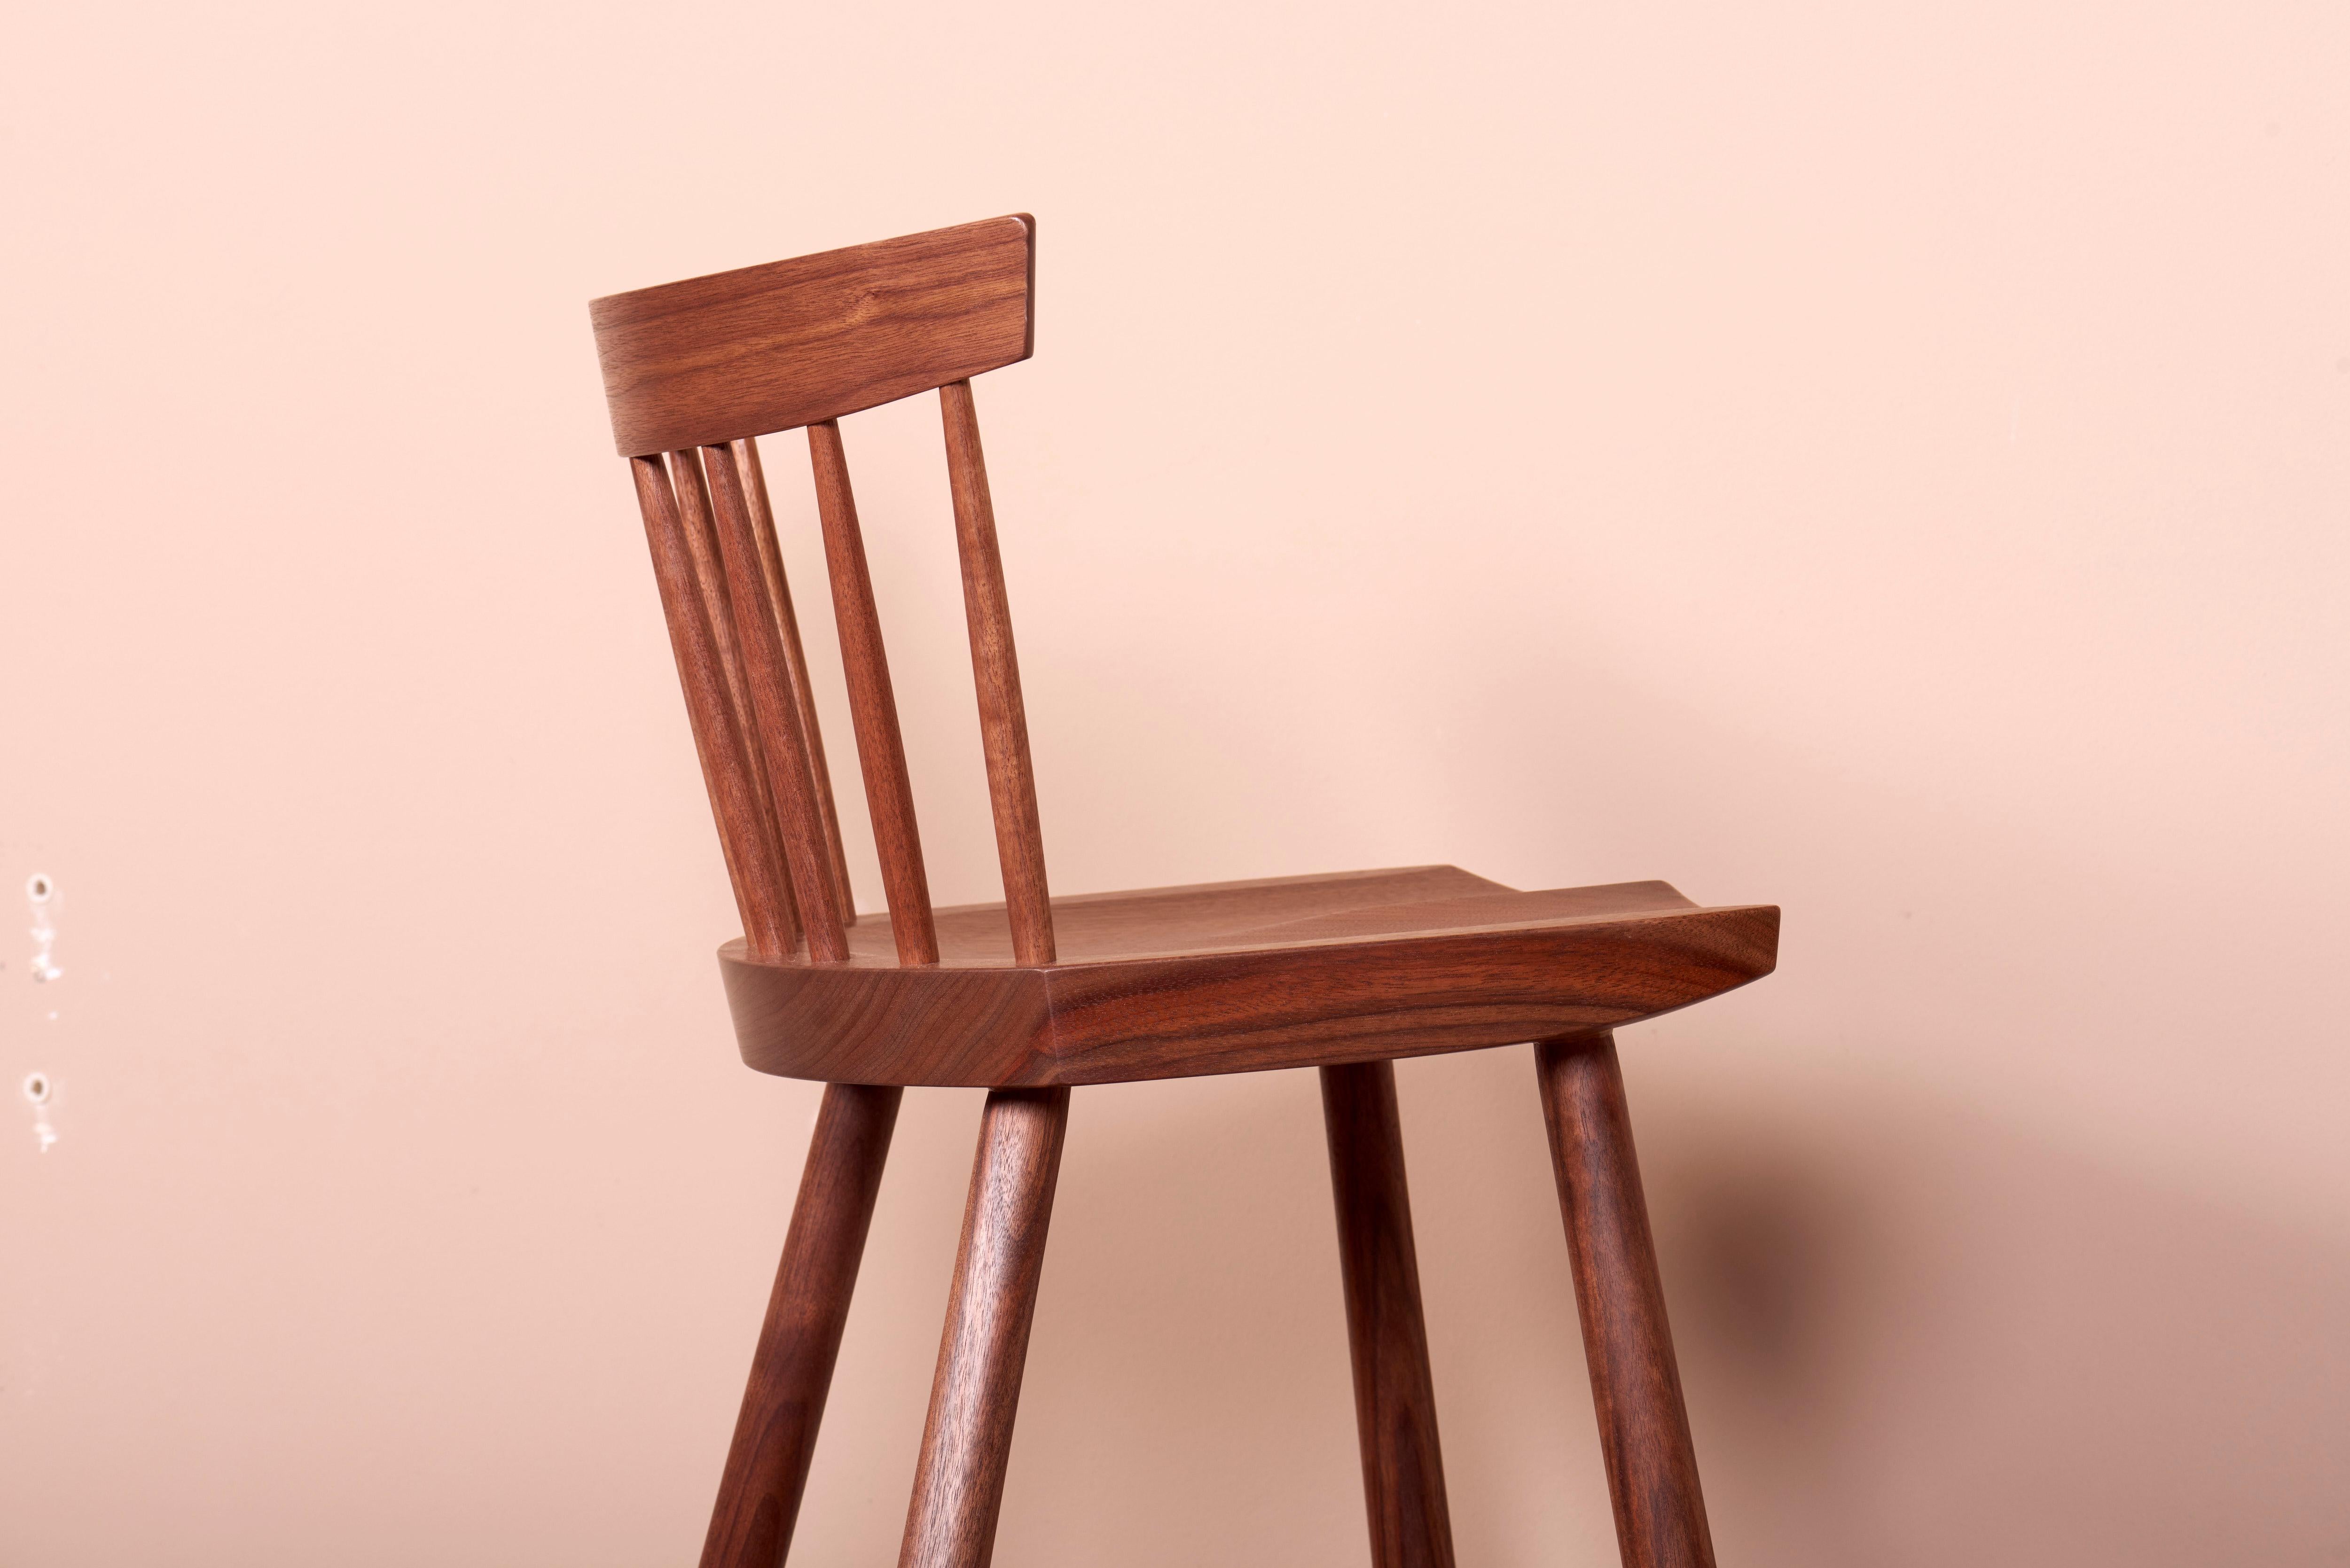 Four Mira Nakashima 4-Legged High Chairs based on a design by George Nakashima For Sale 7